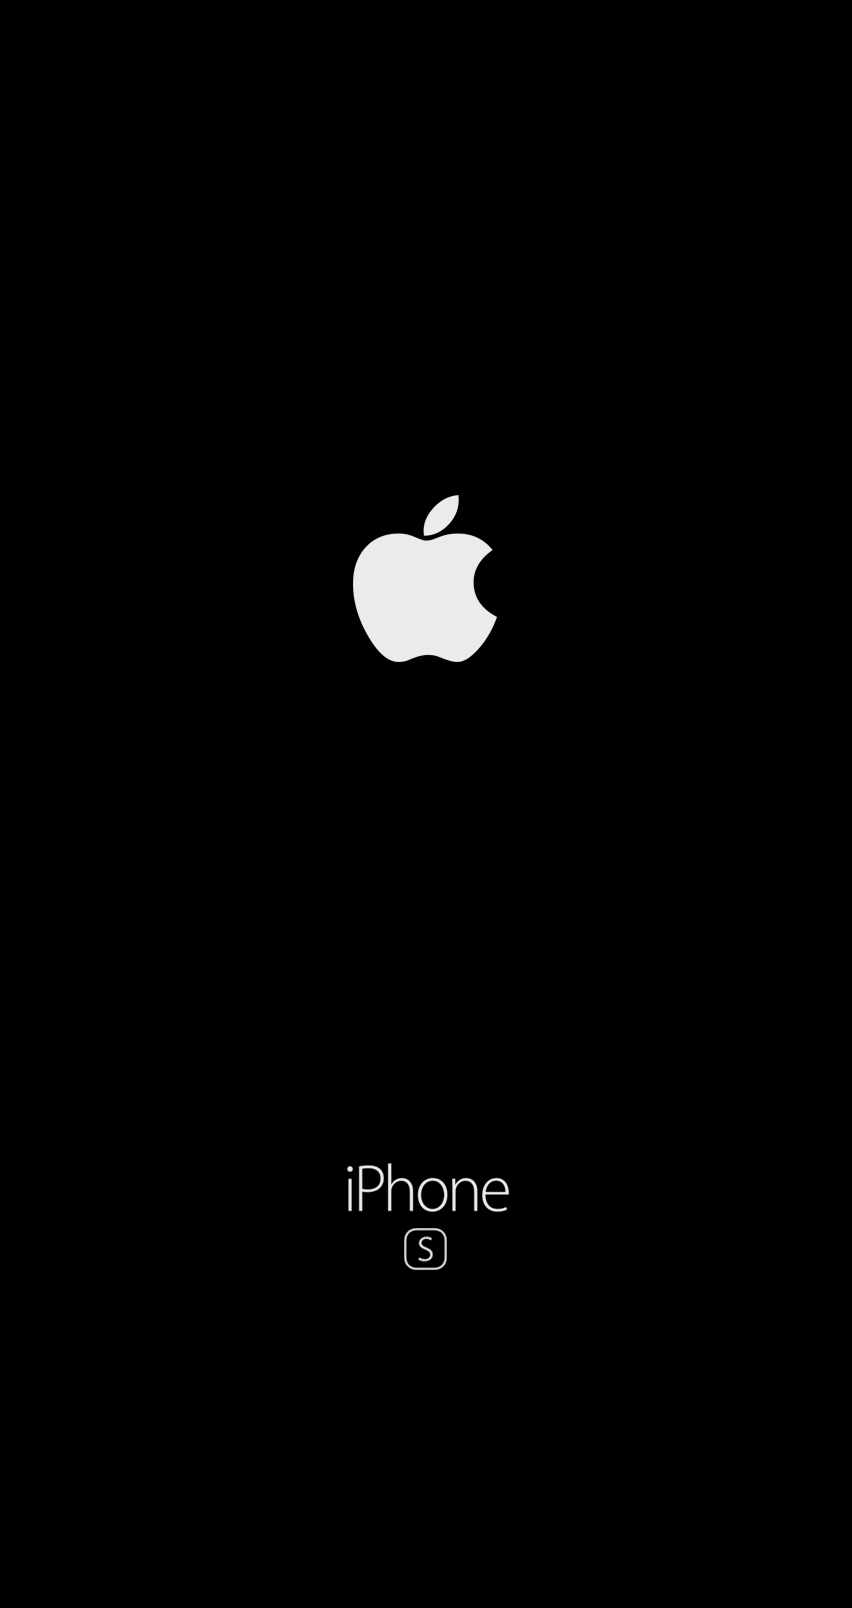 iPhone 6s Wallpaper black logo apple fond d'écran noir. Apple